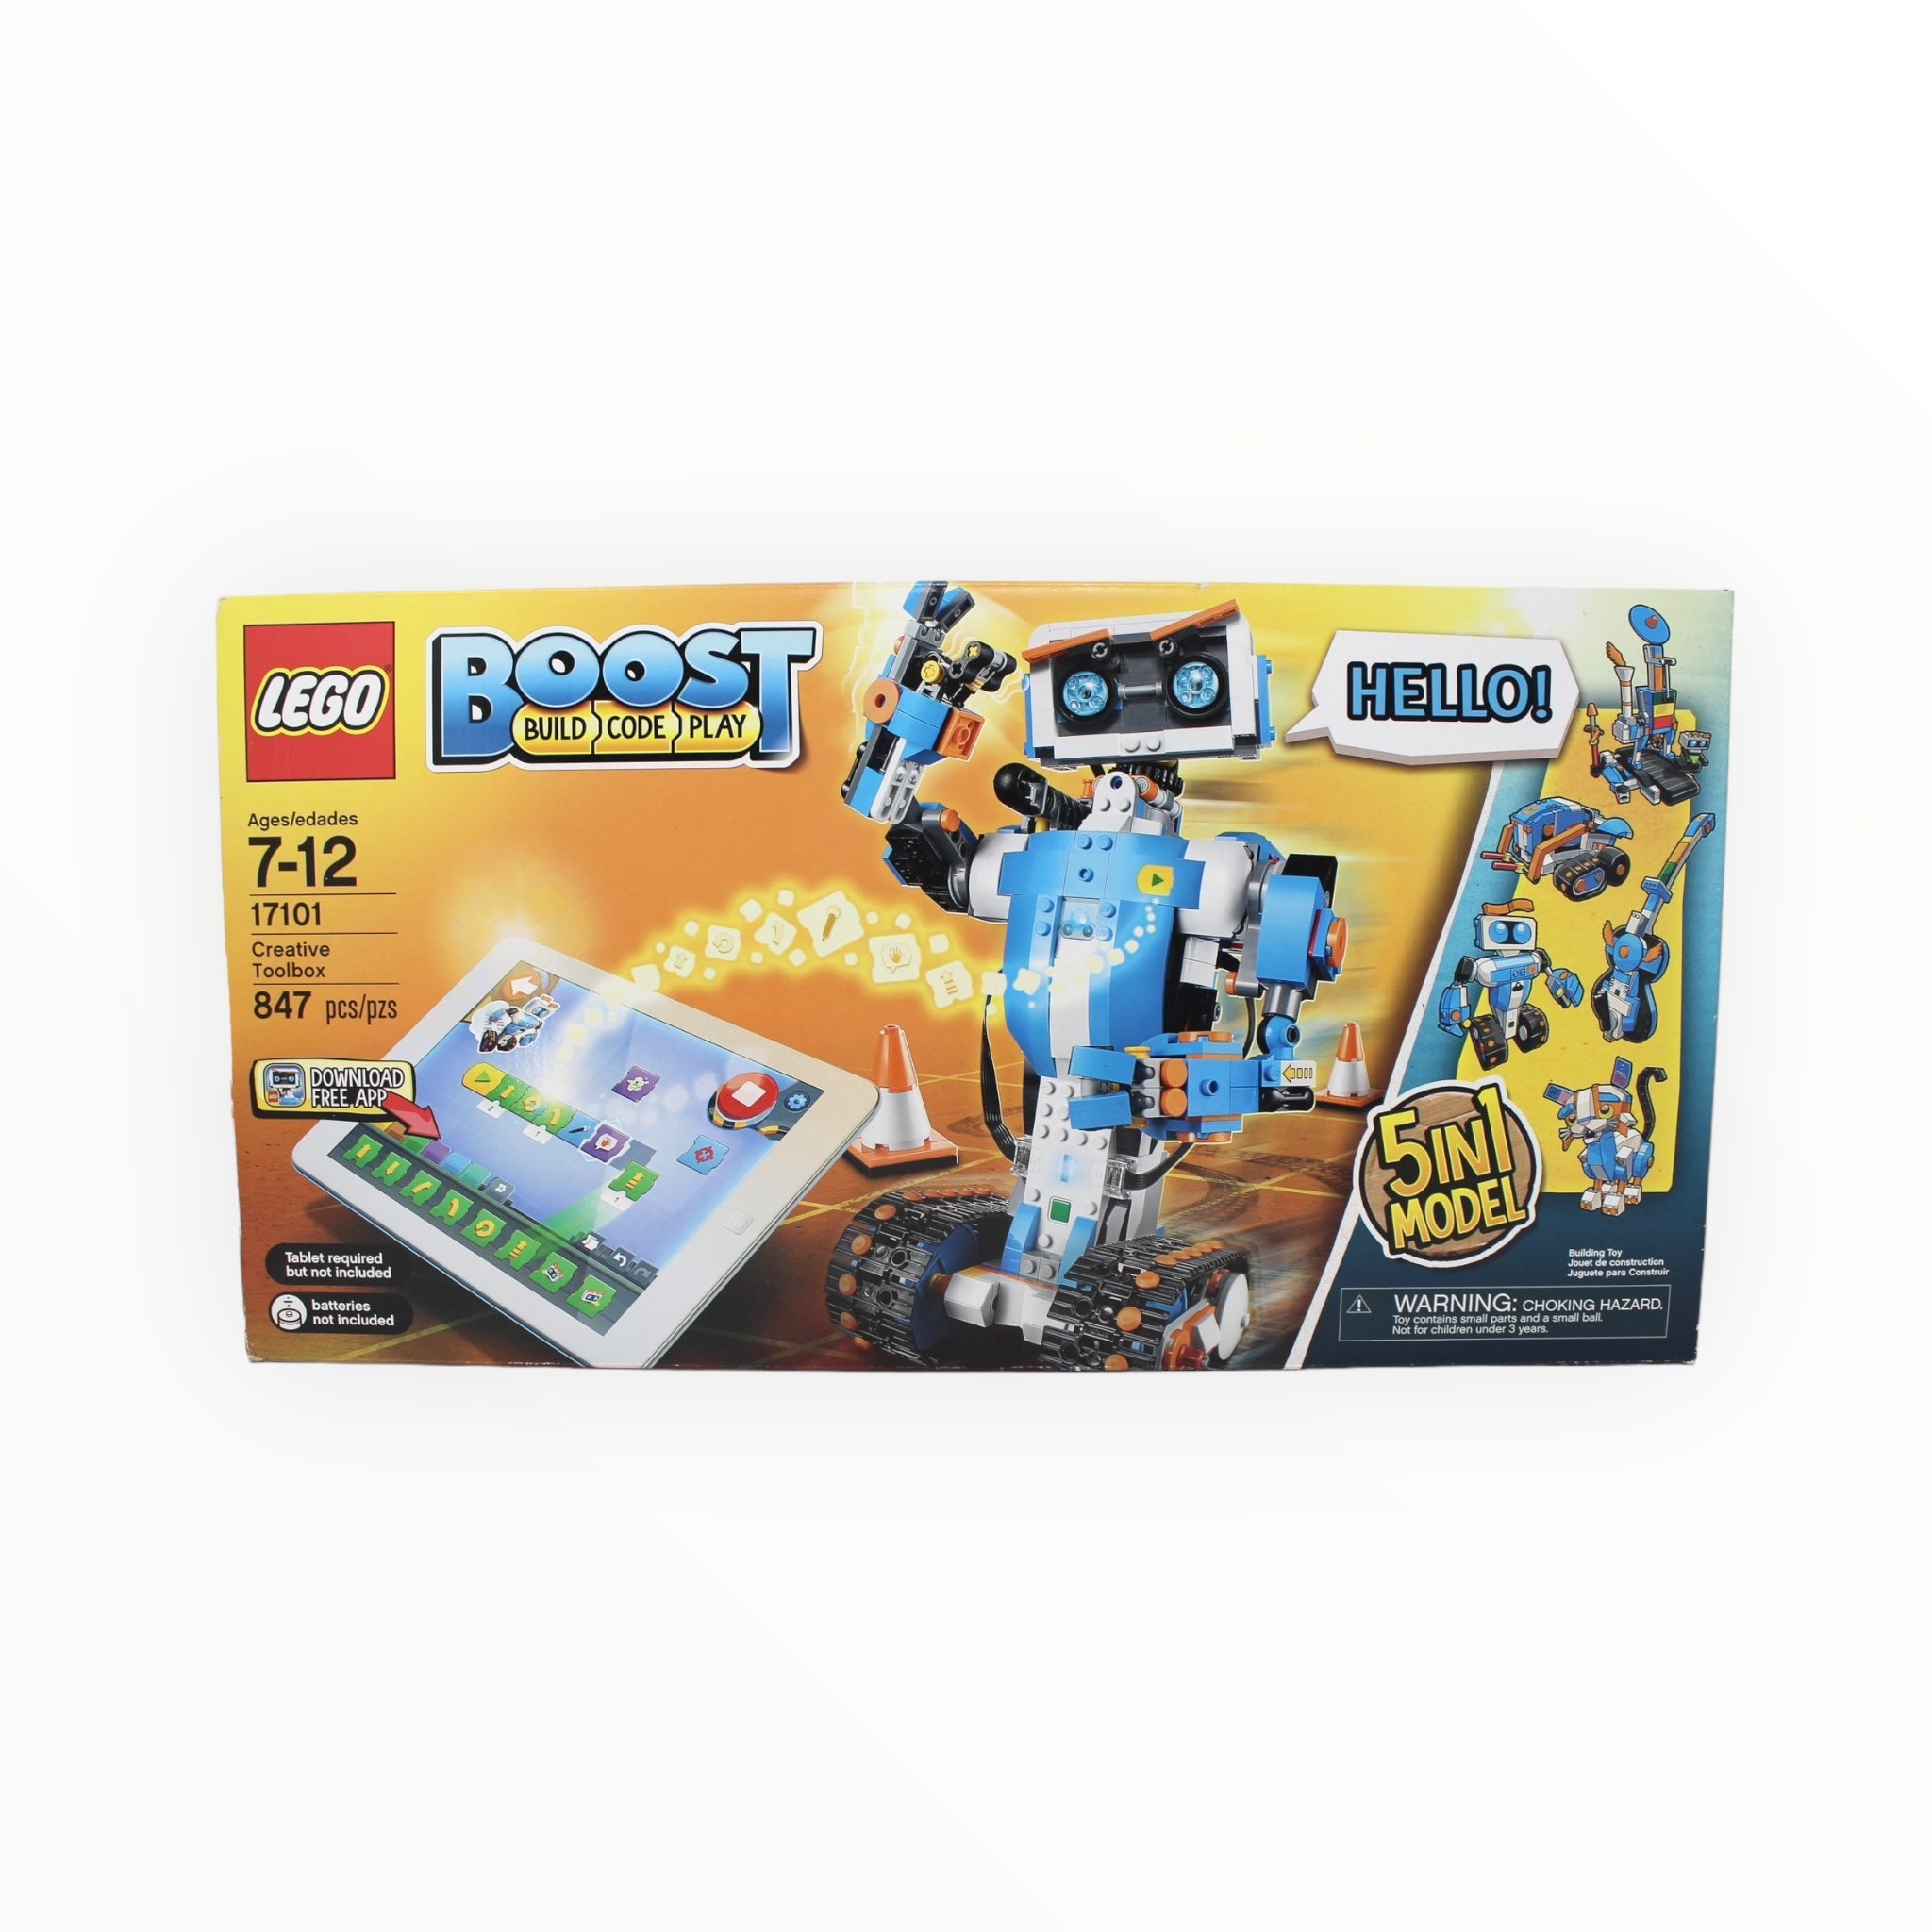 Retired Set 17101 LEGO BOOST Creative Toolbox